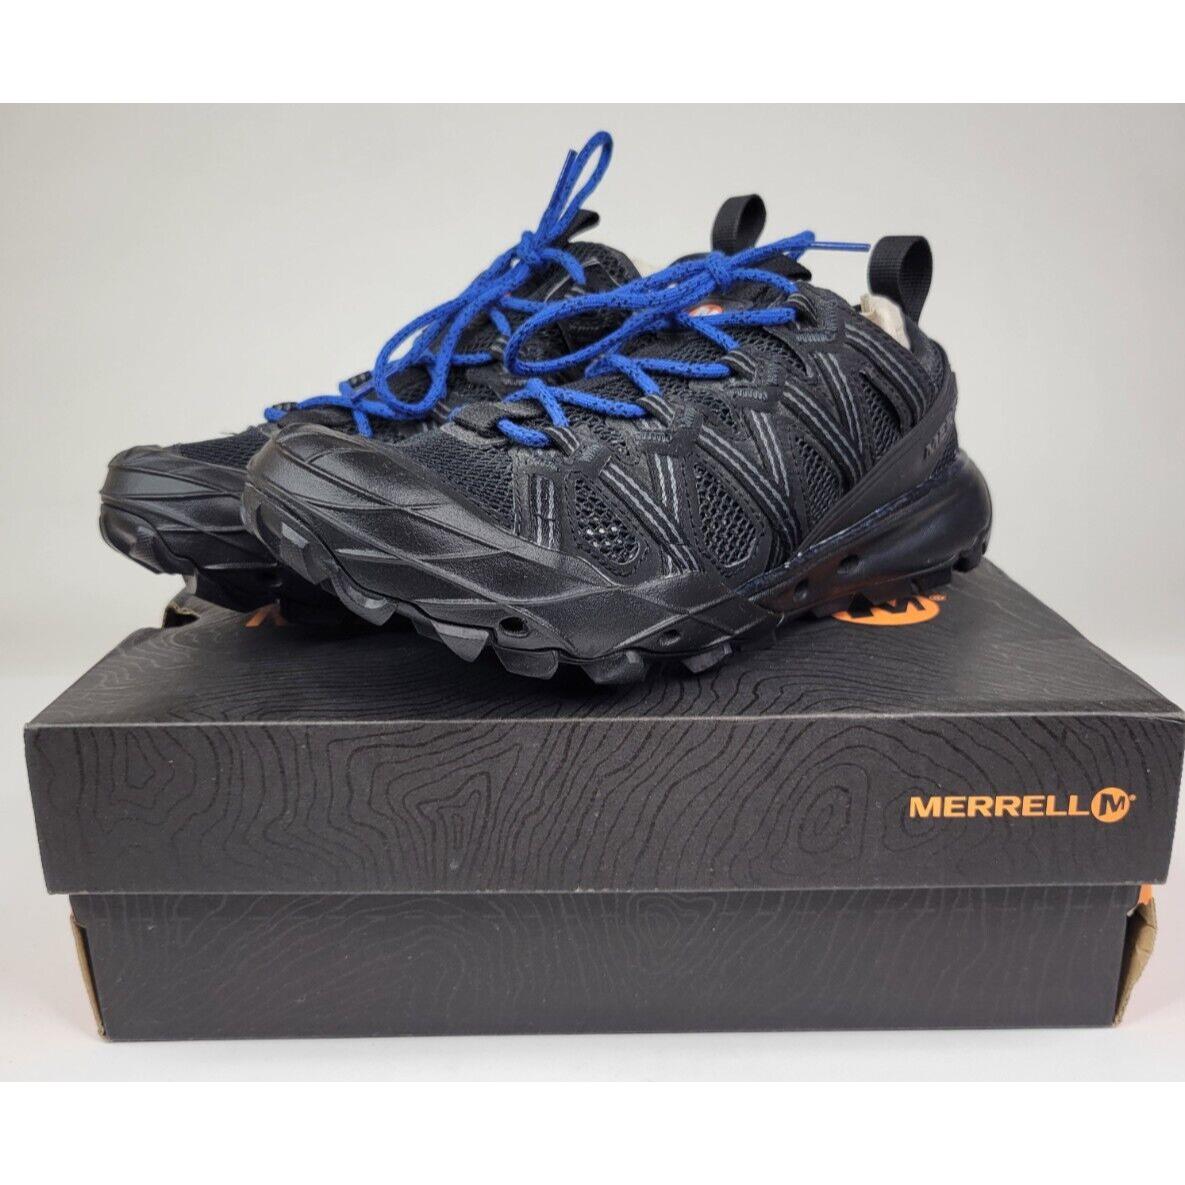 Merrell Mens Size 8 Choprock Trail Hiking Shoes Vibram Black Cobalt Blue